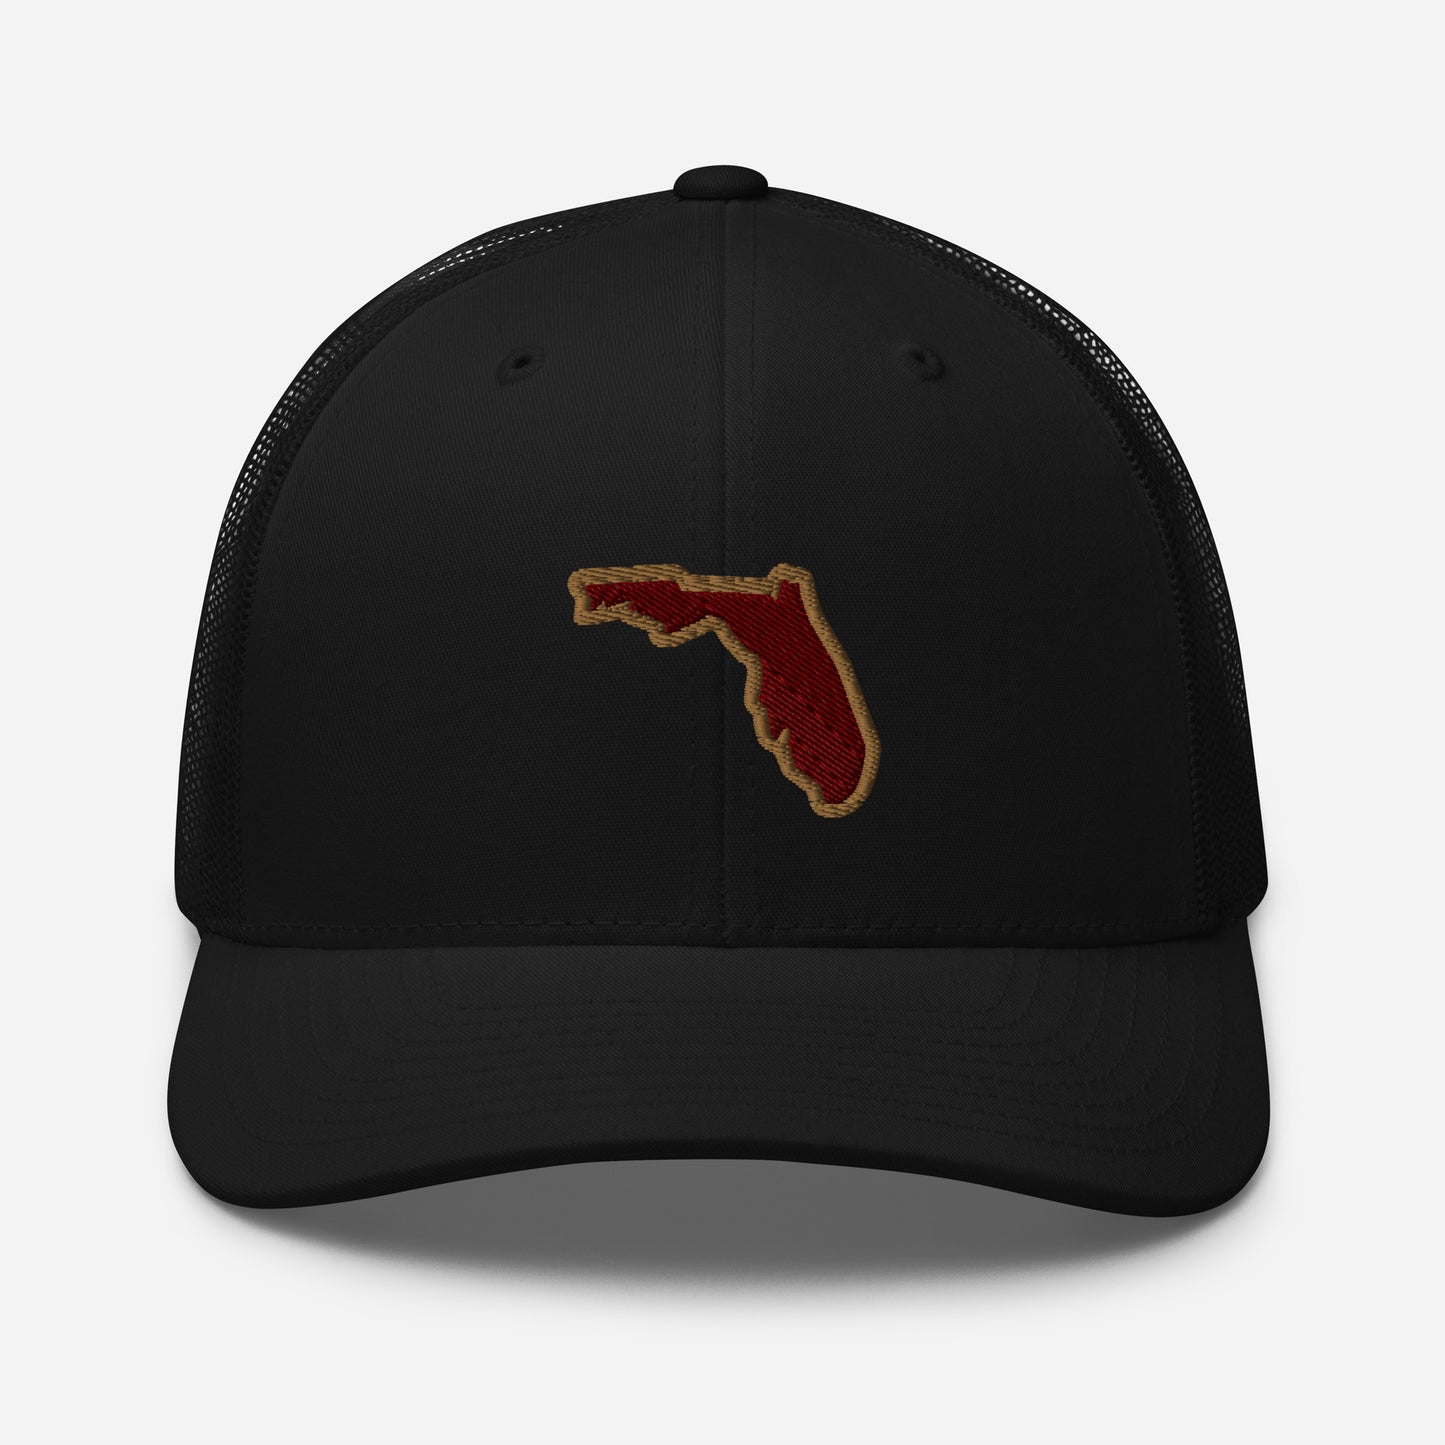 Seminoles Trucker Hat: Florida State